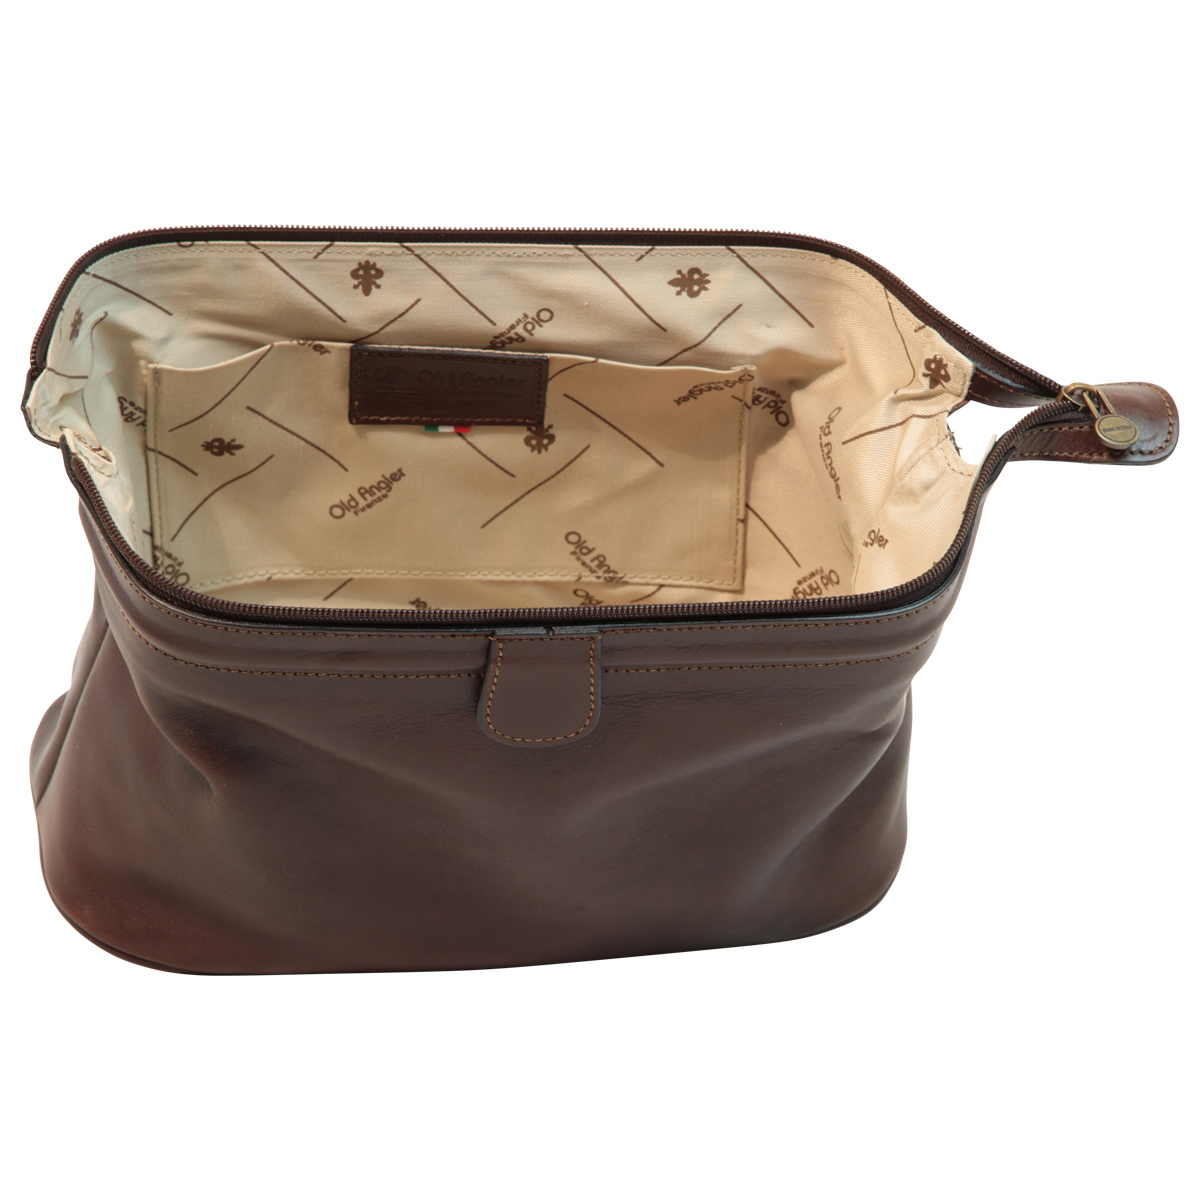 Leather Beauty Case - Dark Brown | 065489TM US | Old Angler Firenze